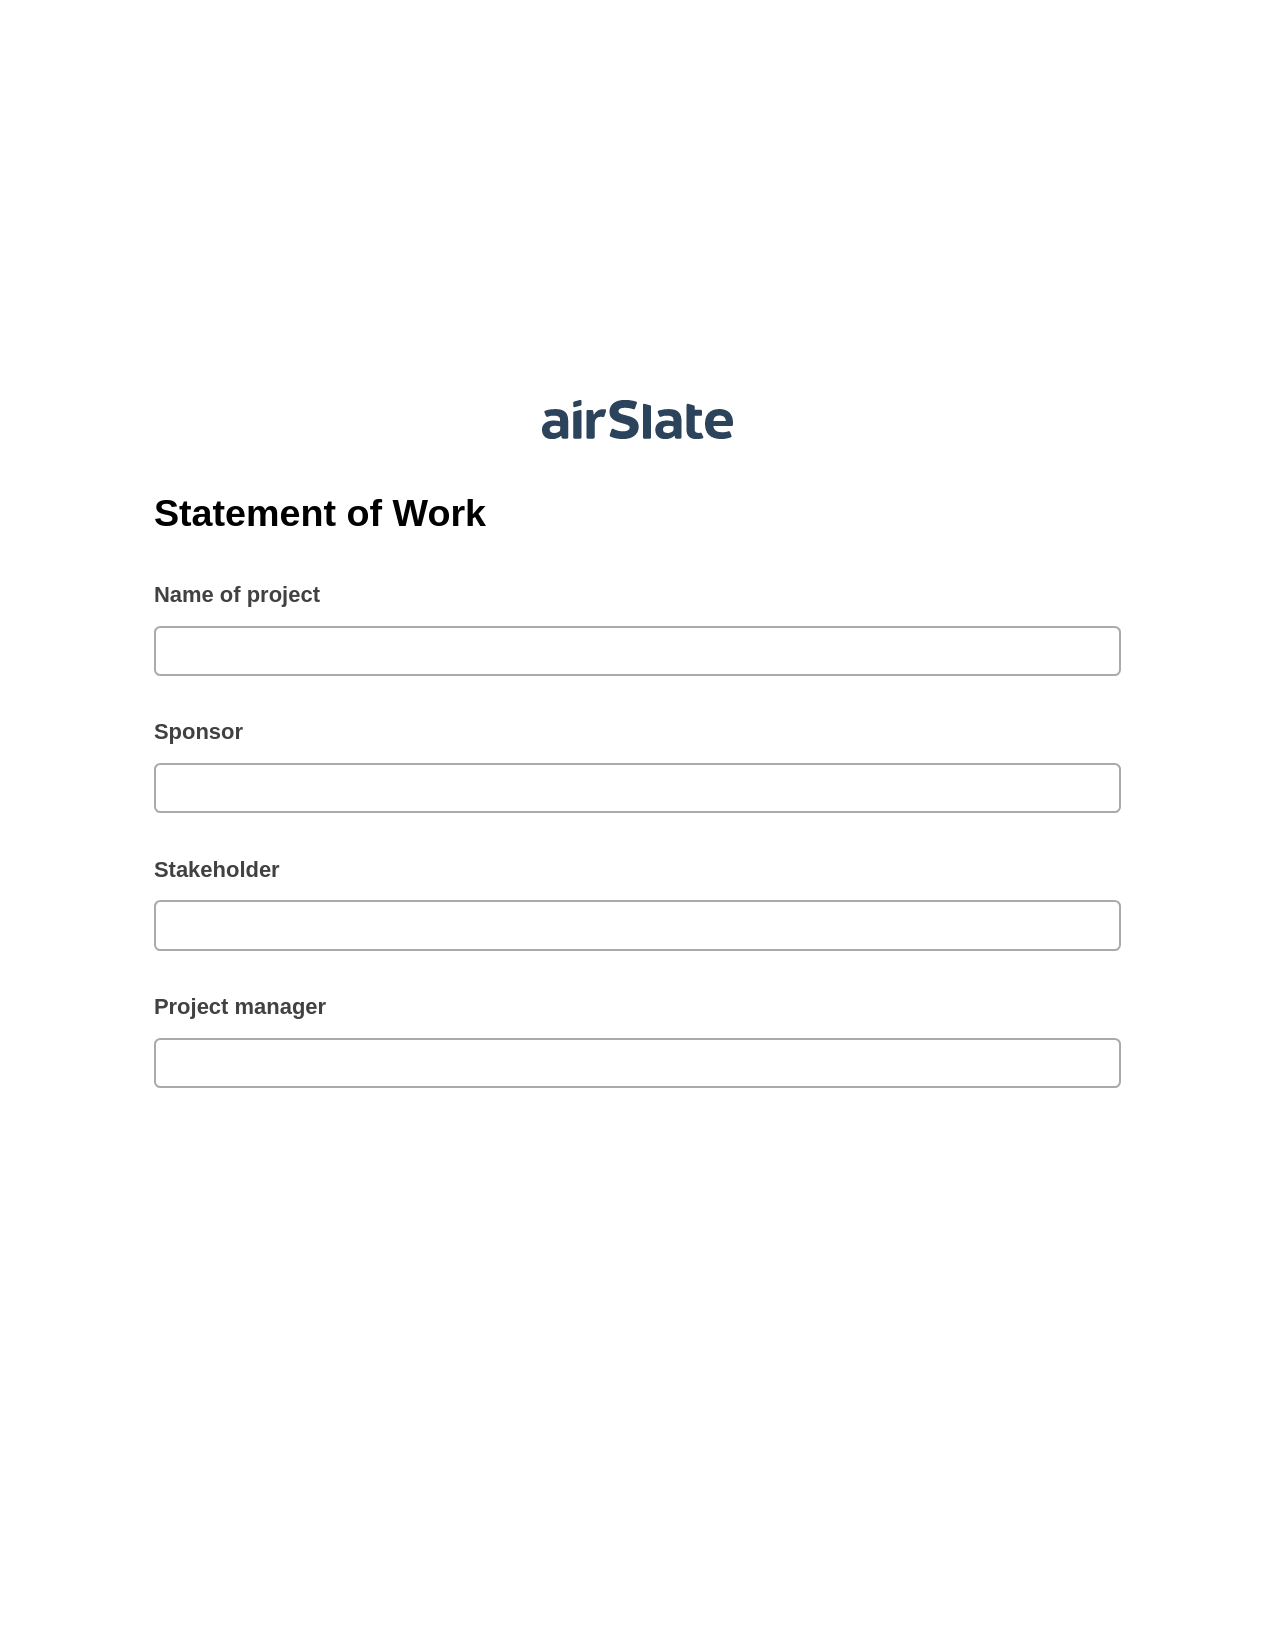 Multirole Statement of Work Pre-fill from Salesforce Record Bot, Invoke Salesforce Process Bot, Export to Smartsheet